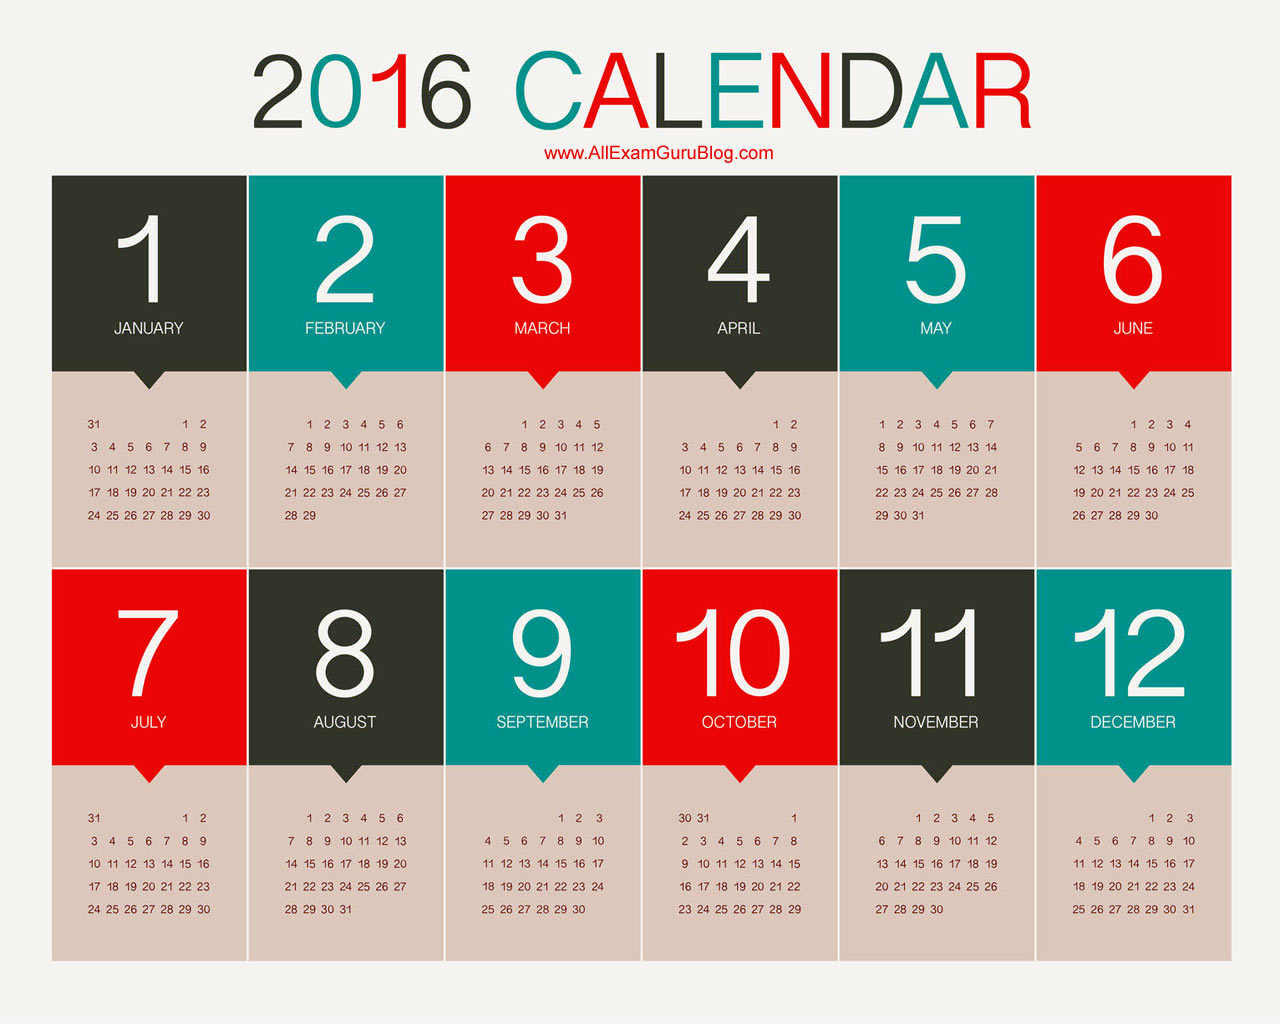 HD Calendar Wallpaper Image Of